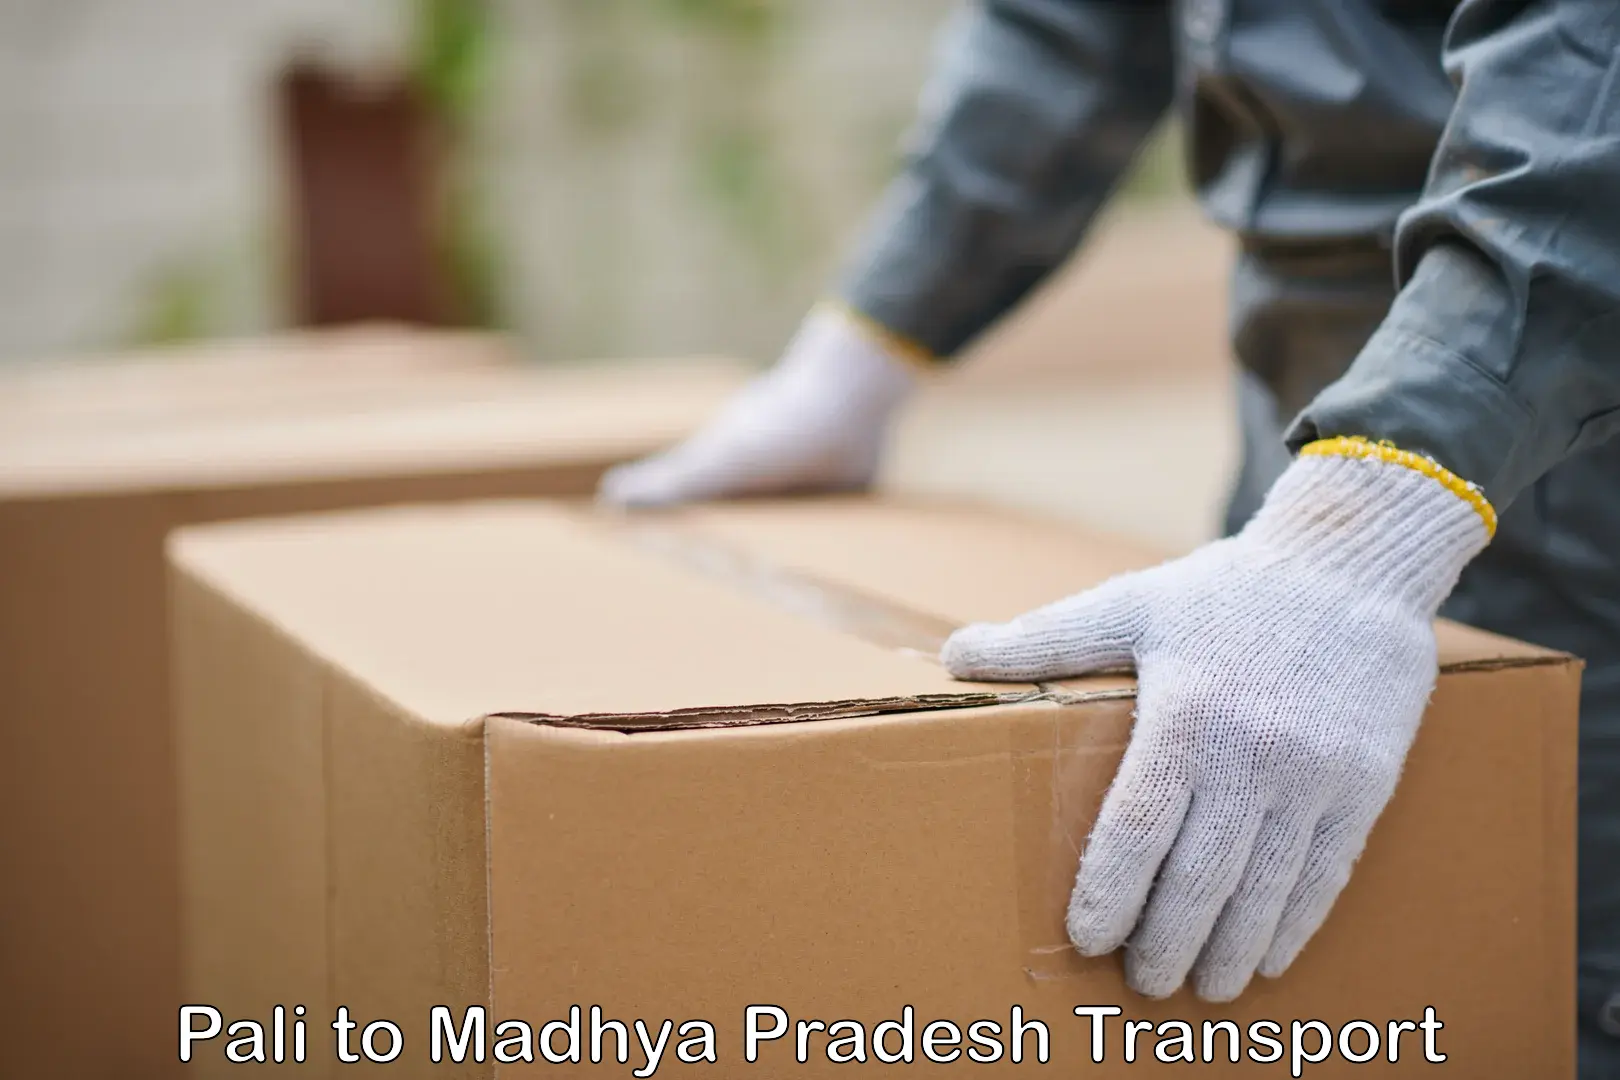 Delivery service Pali to Madhya Pradesh